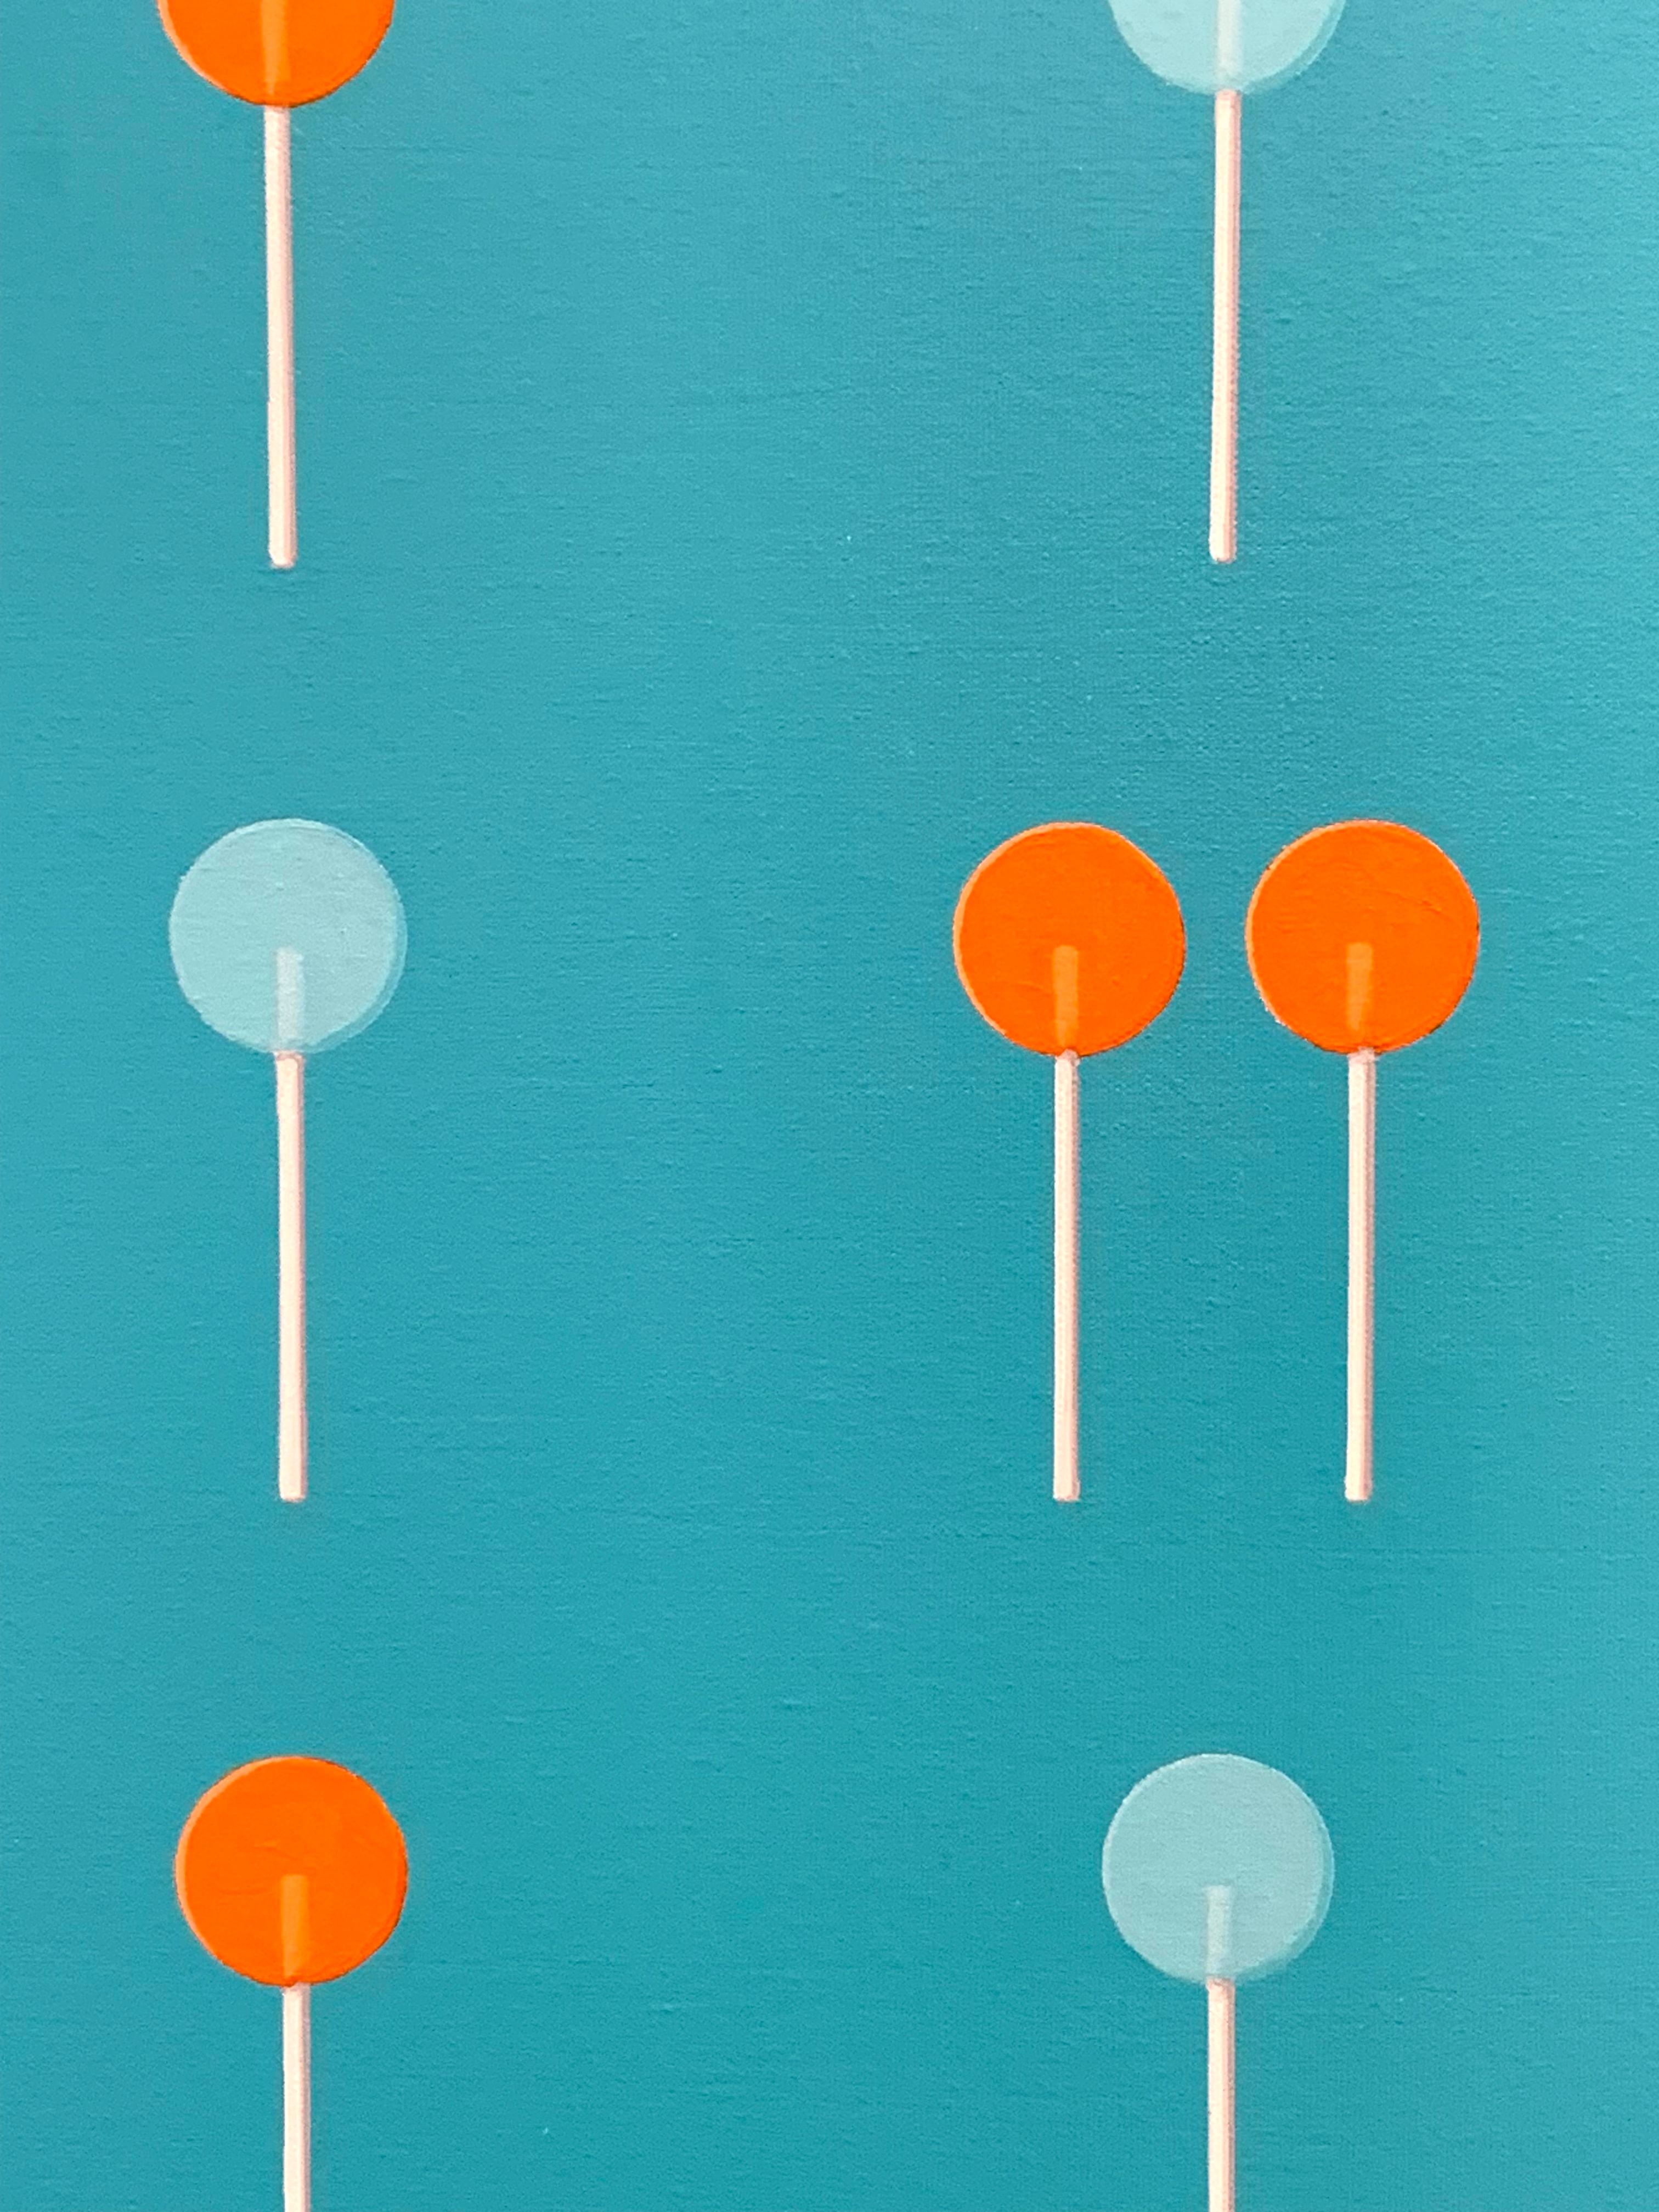 Lollipops - Pop Art Painting by Stephen Bezas